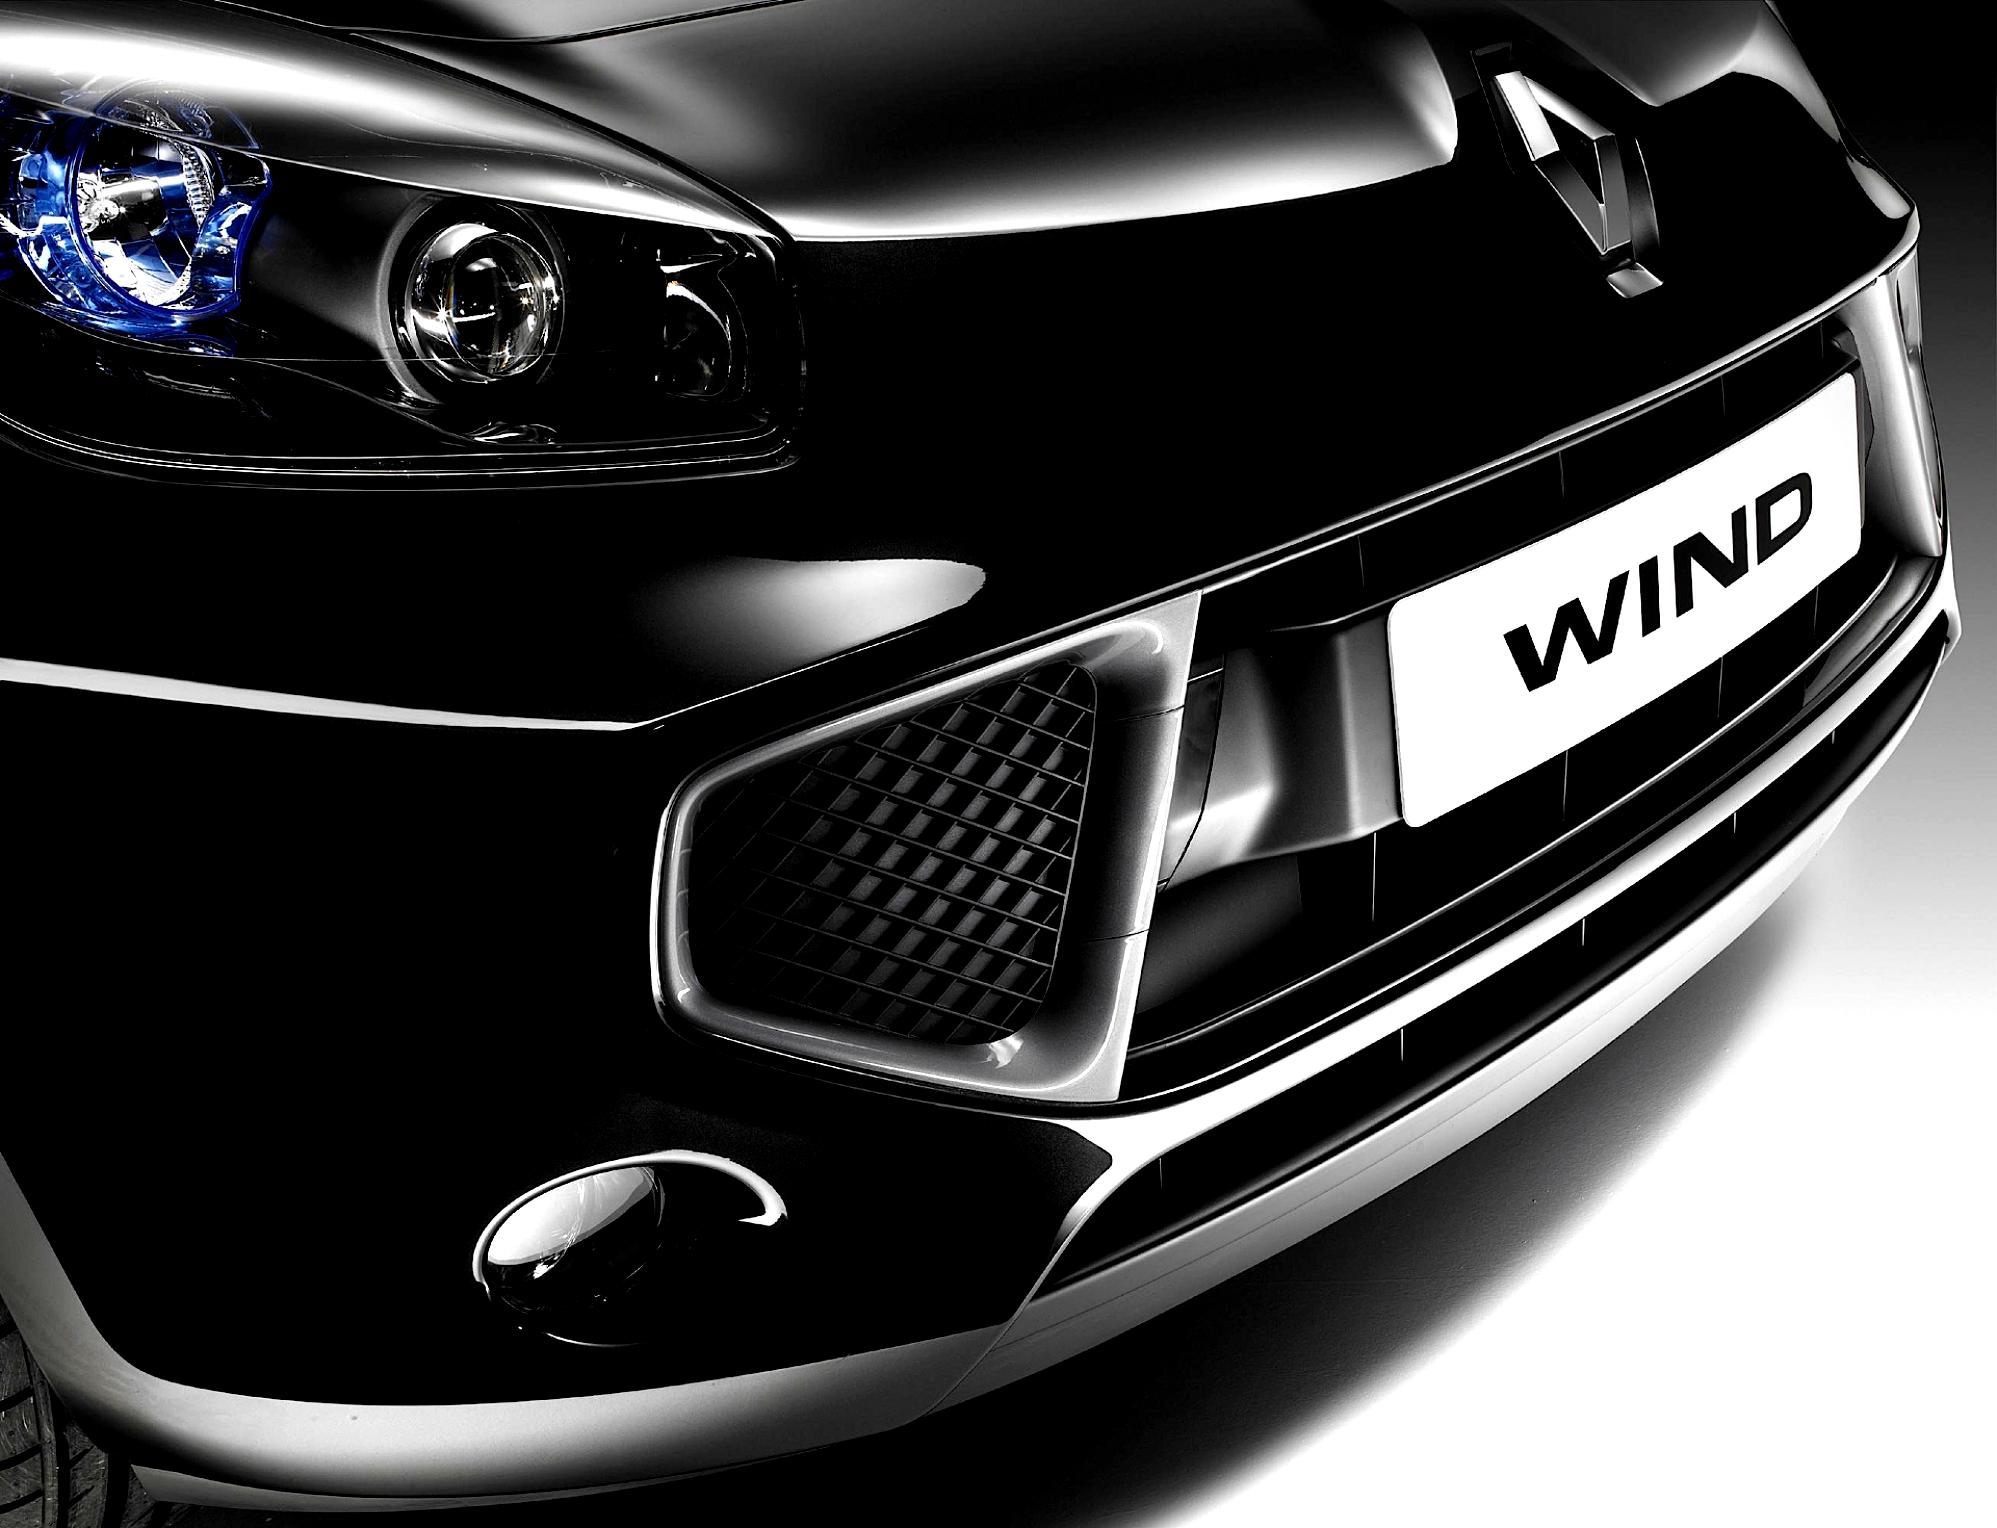 Renault Wind 2010 #17